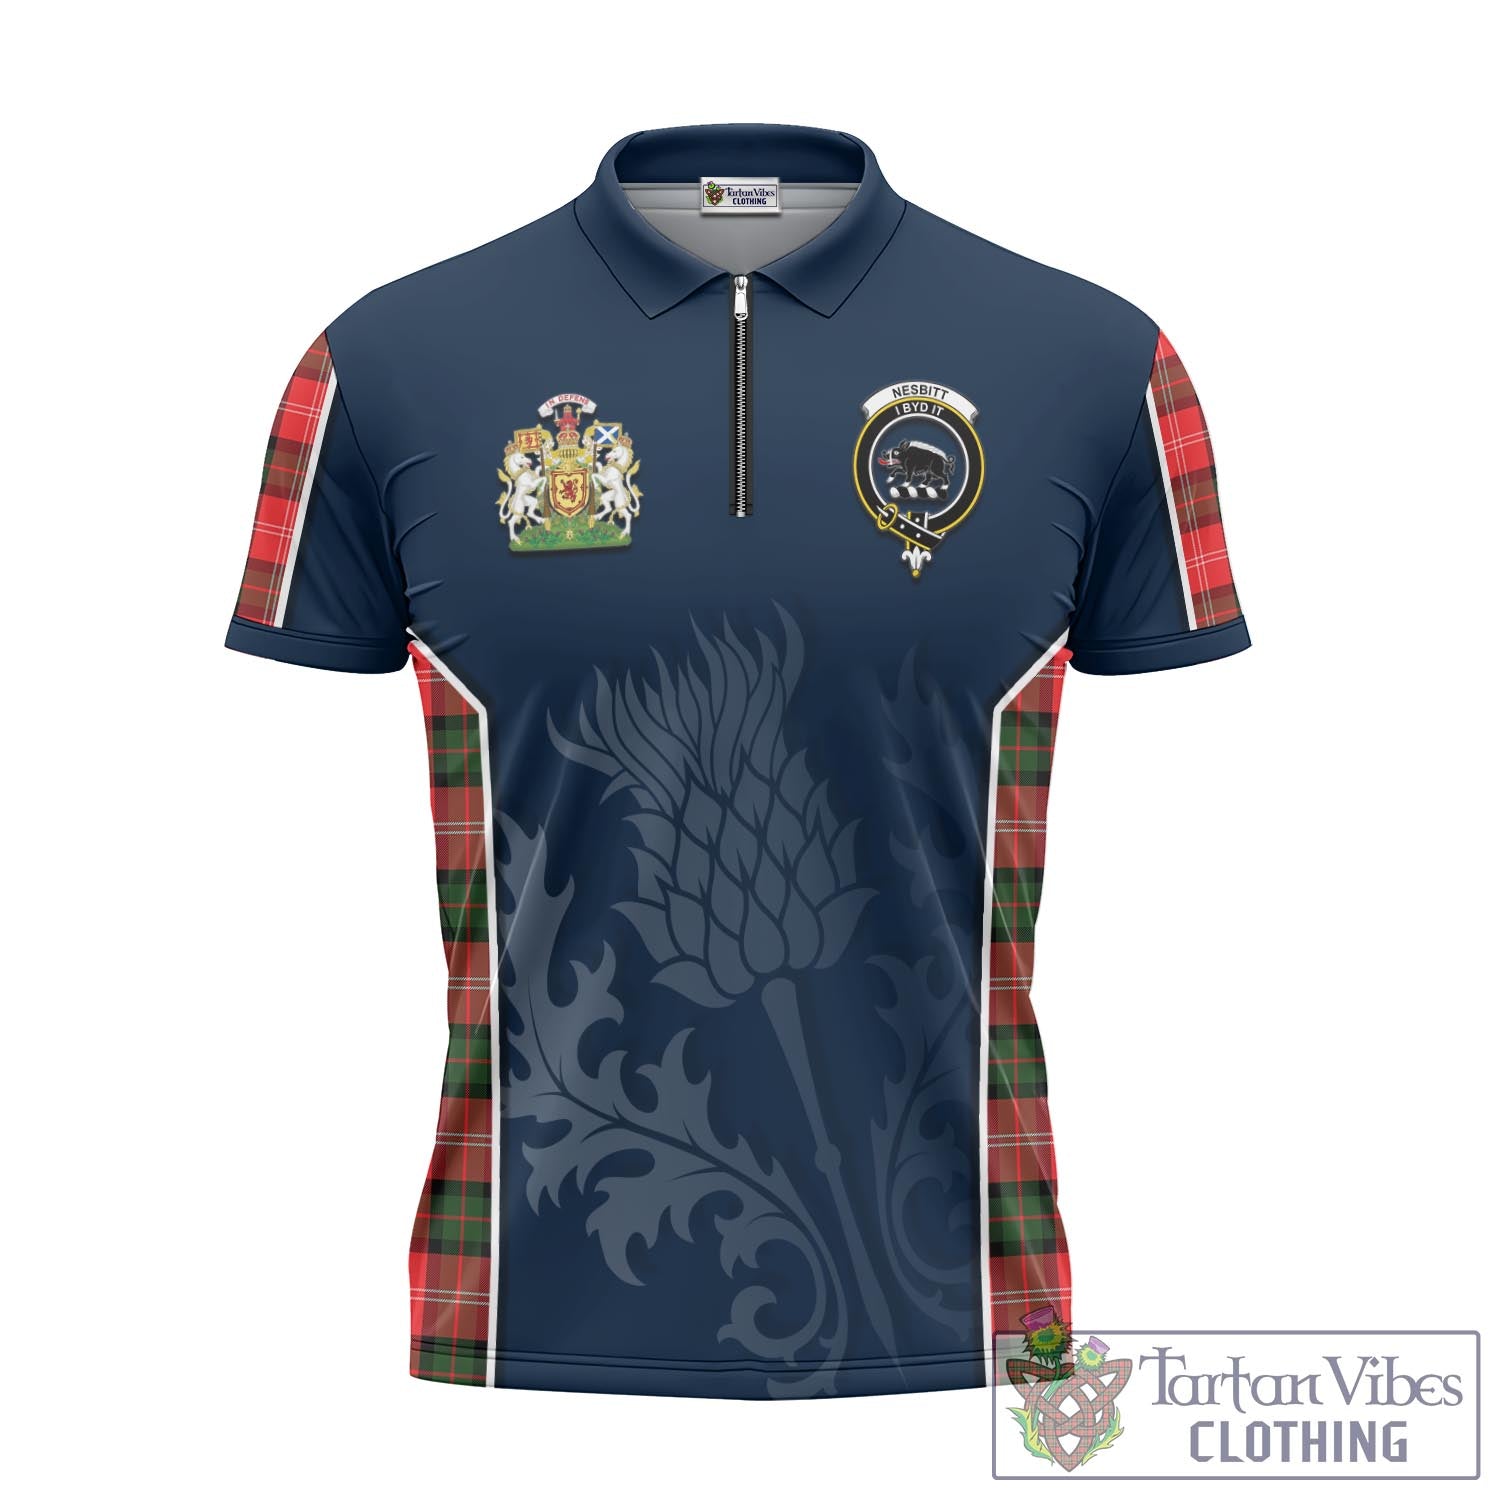 Tartan Vibes Clothing Nesbitt Modern Tartan Zipper Polo Shirt with Family Crest and Scottish Thistle Vibes Sport Style